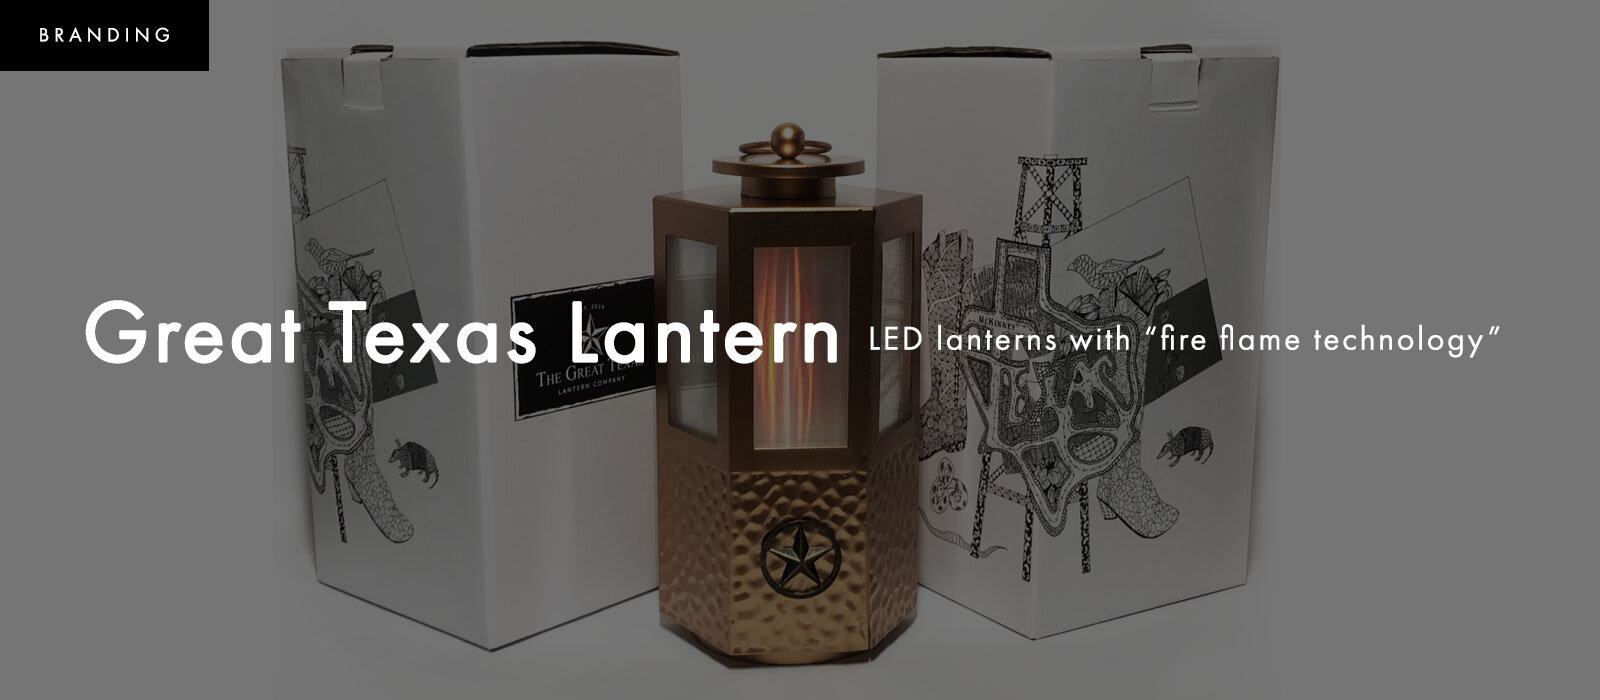 branding-texas-lantern.jpg